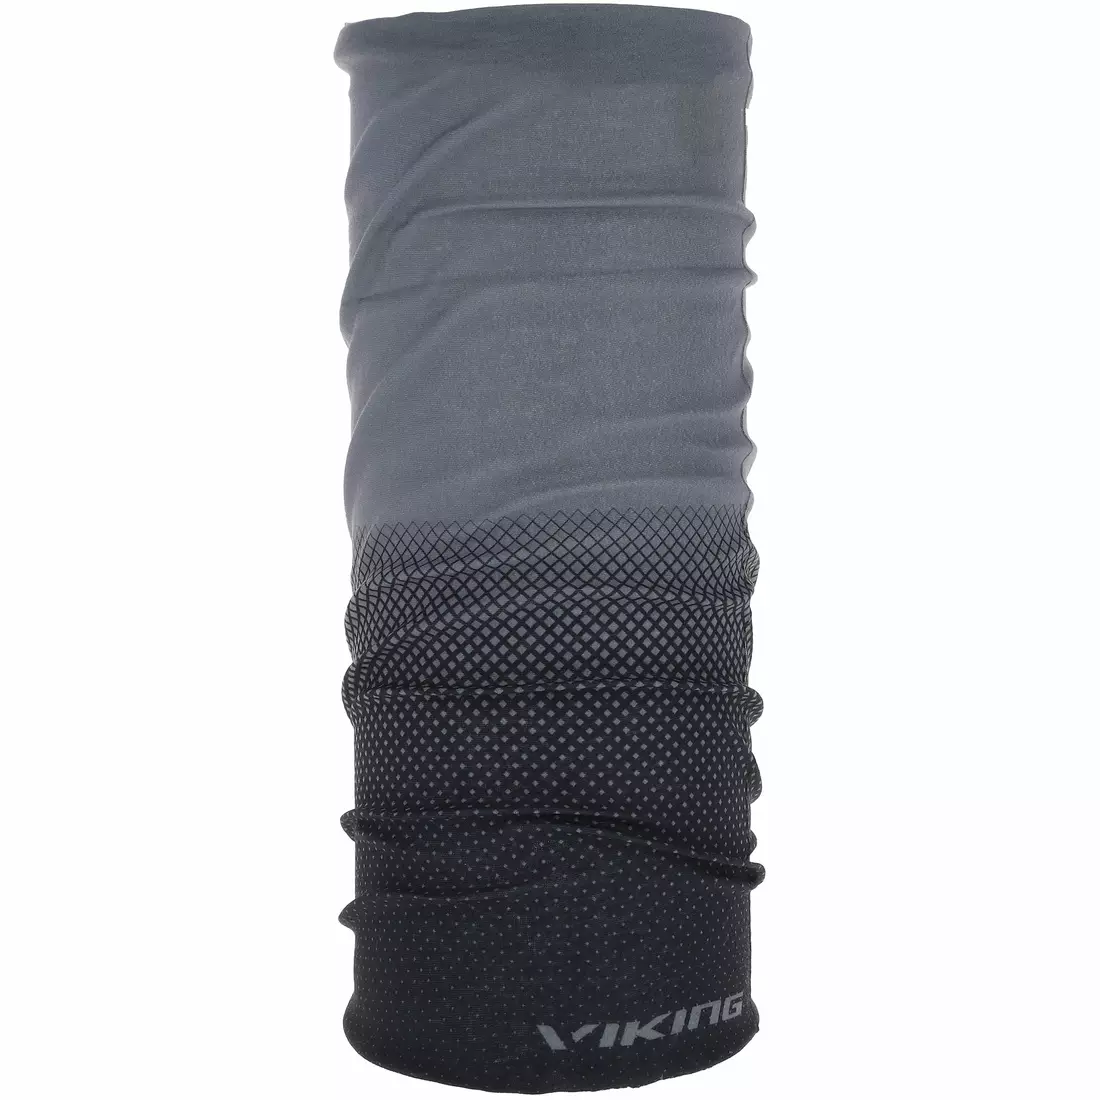 VIKING multifunctional bandana 7552 REGULAR black/grey 410/23/7552/08